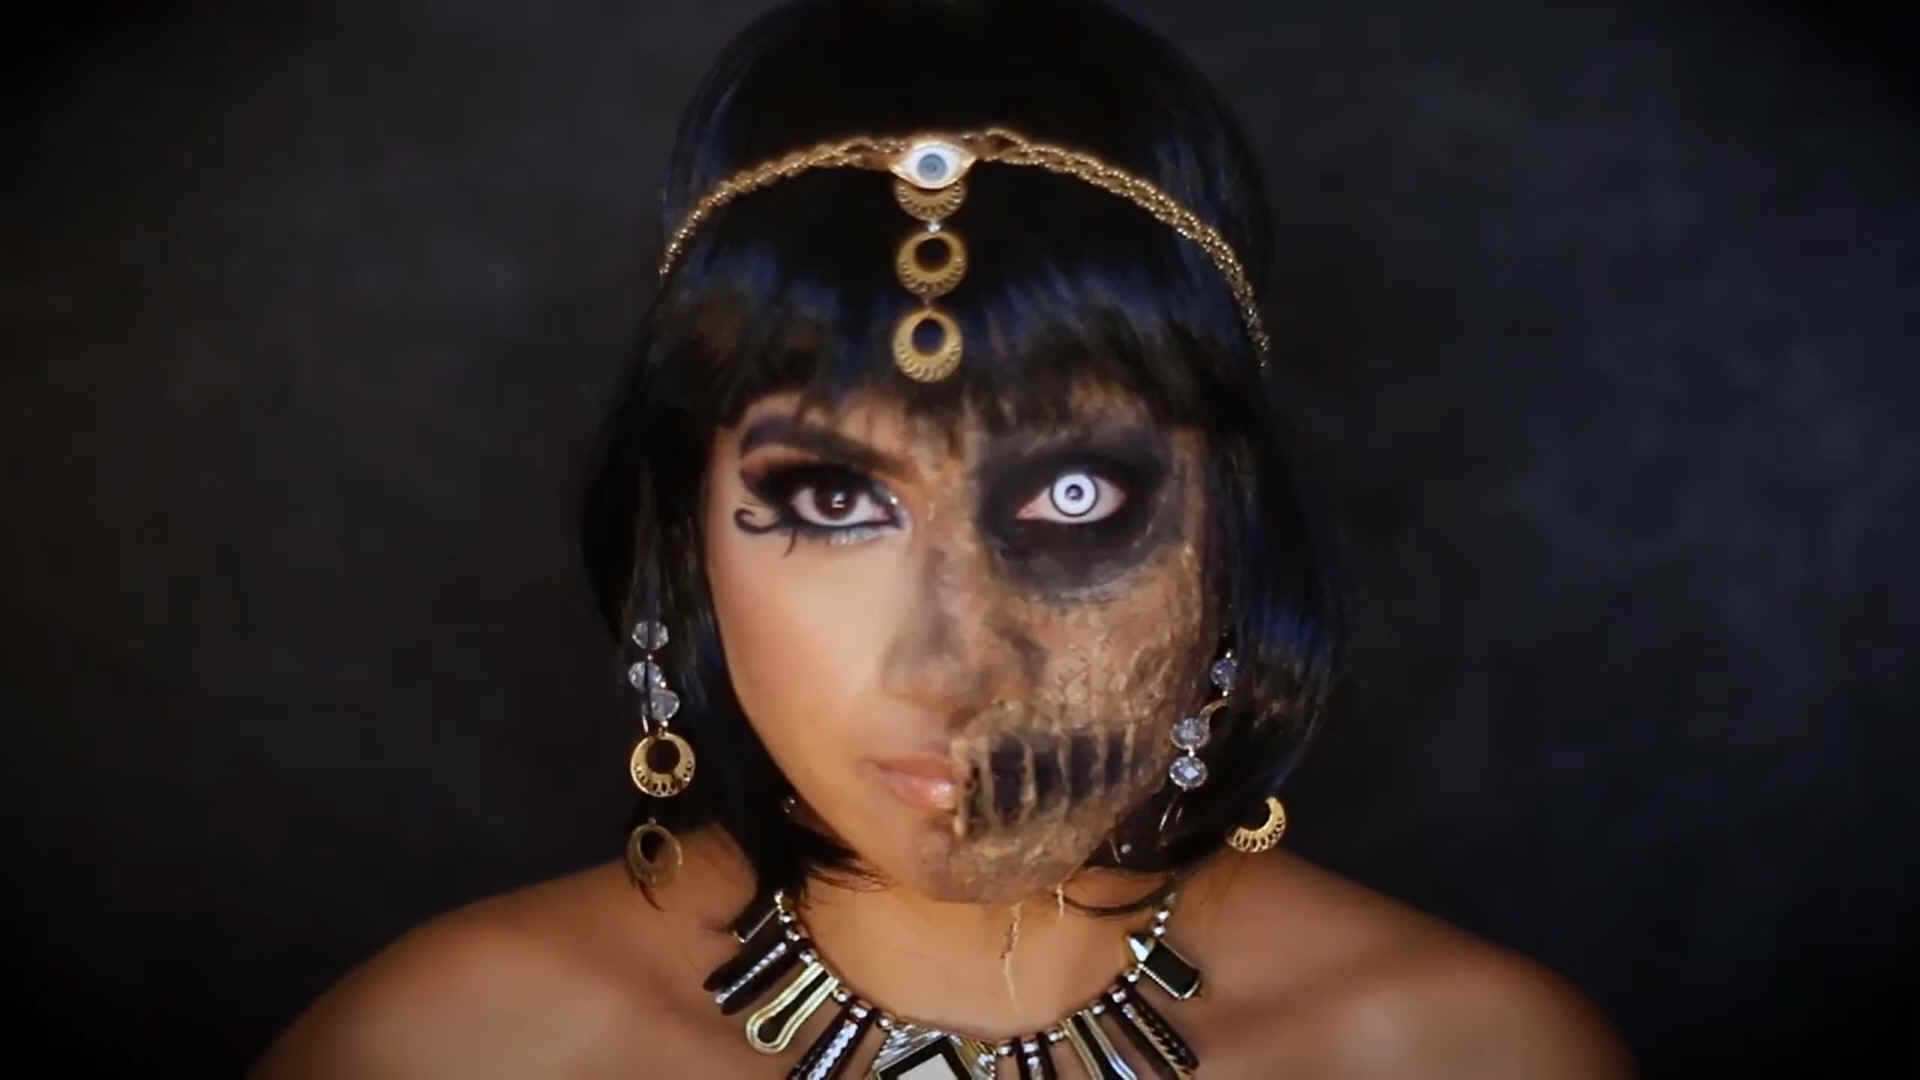 Using makeup to create Cleopatra mummy look